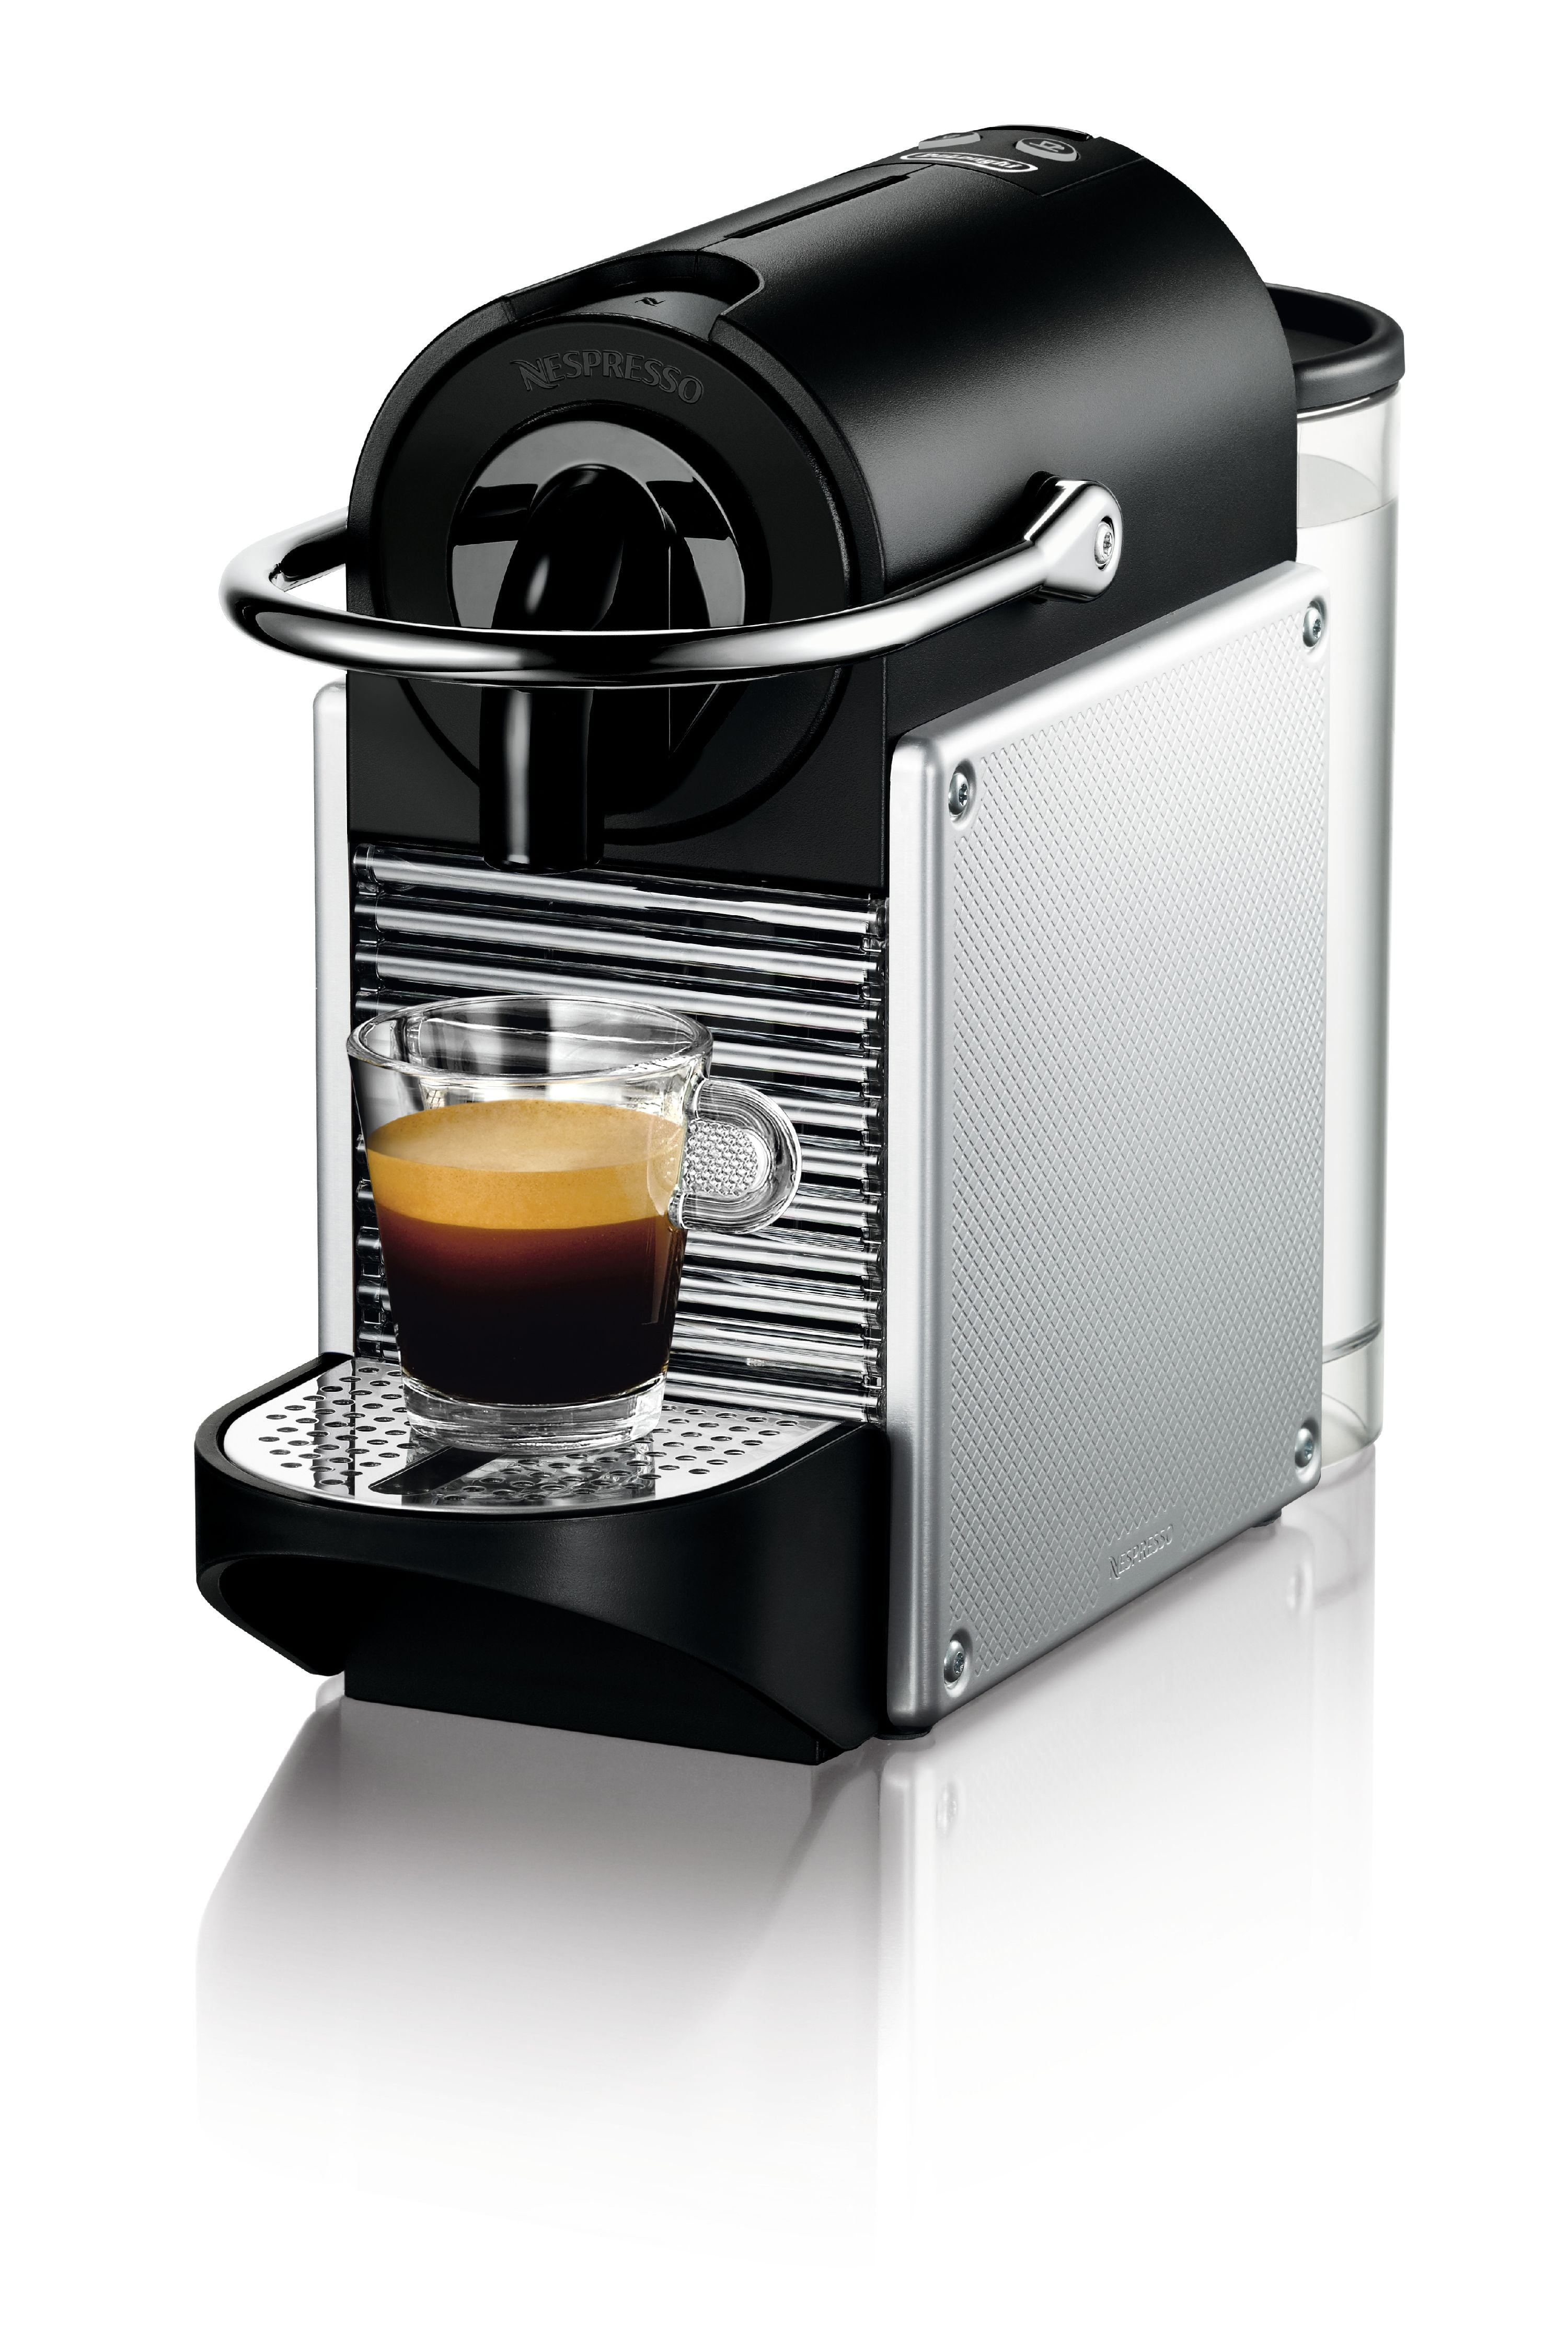 Nespresso Pixie Espresso Machine by De'Longhi, Aluminum